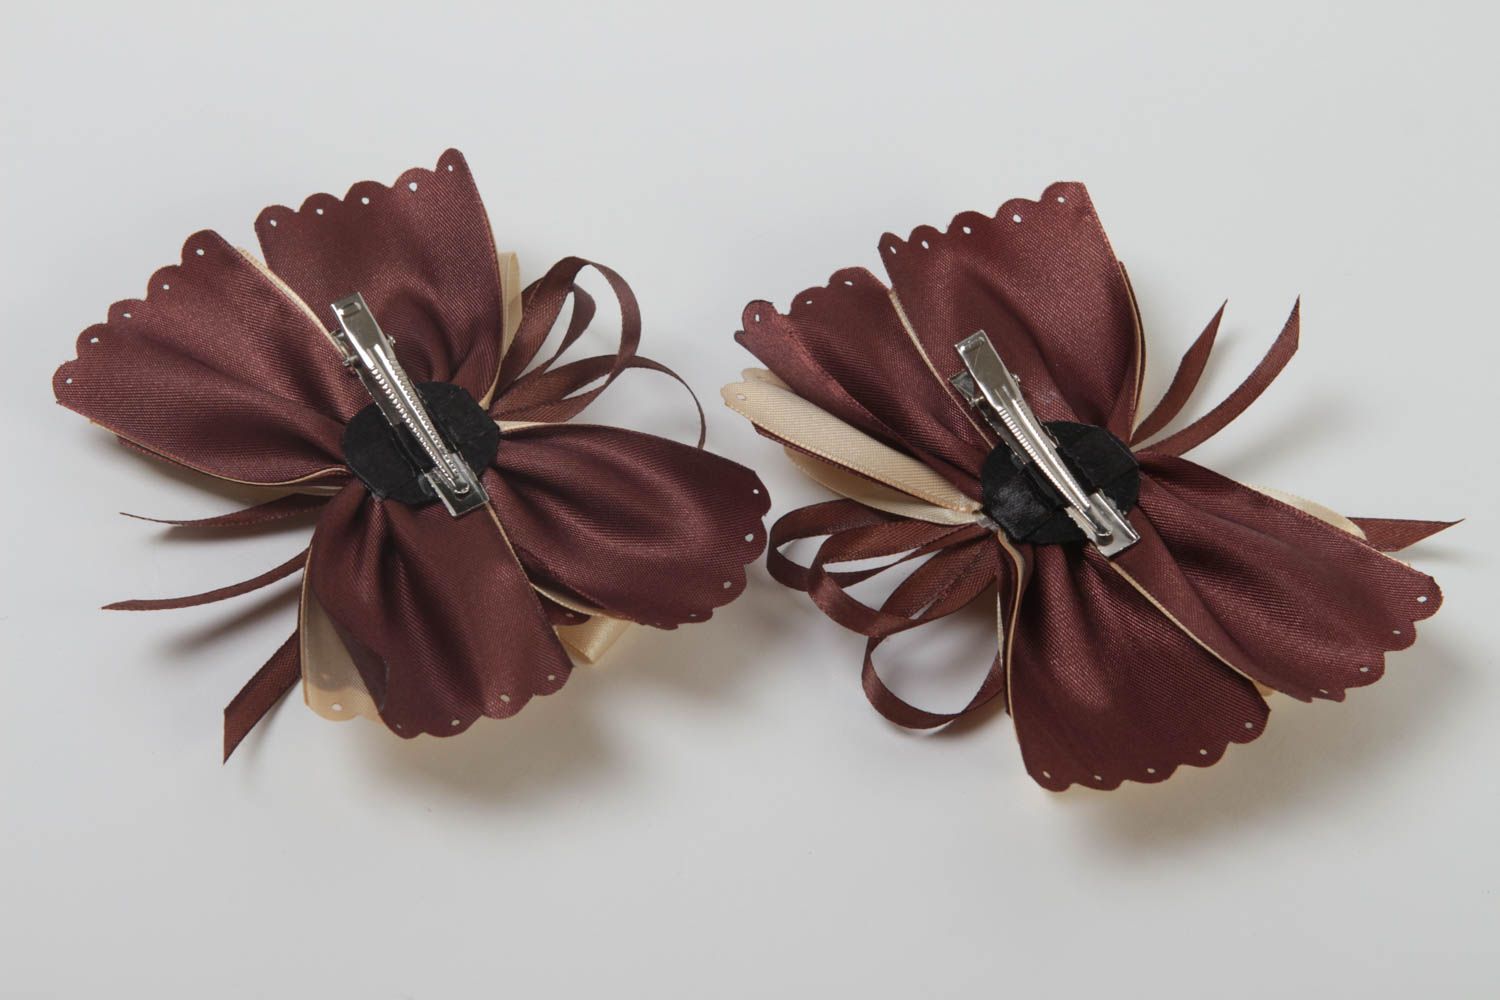 Handmade barrettes for girls stylish hair accessories cute hair clips 2 pieces photo 4